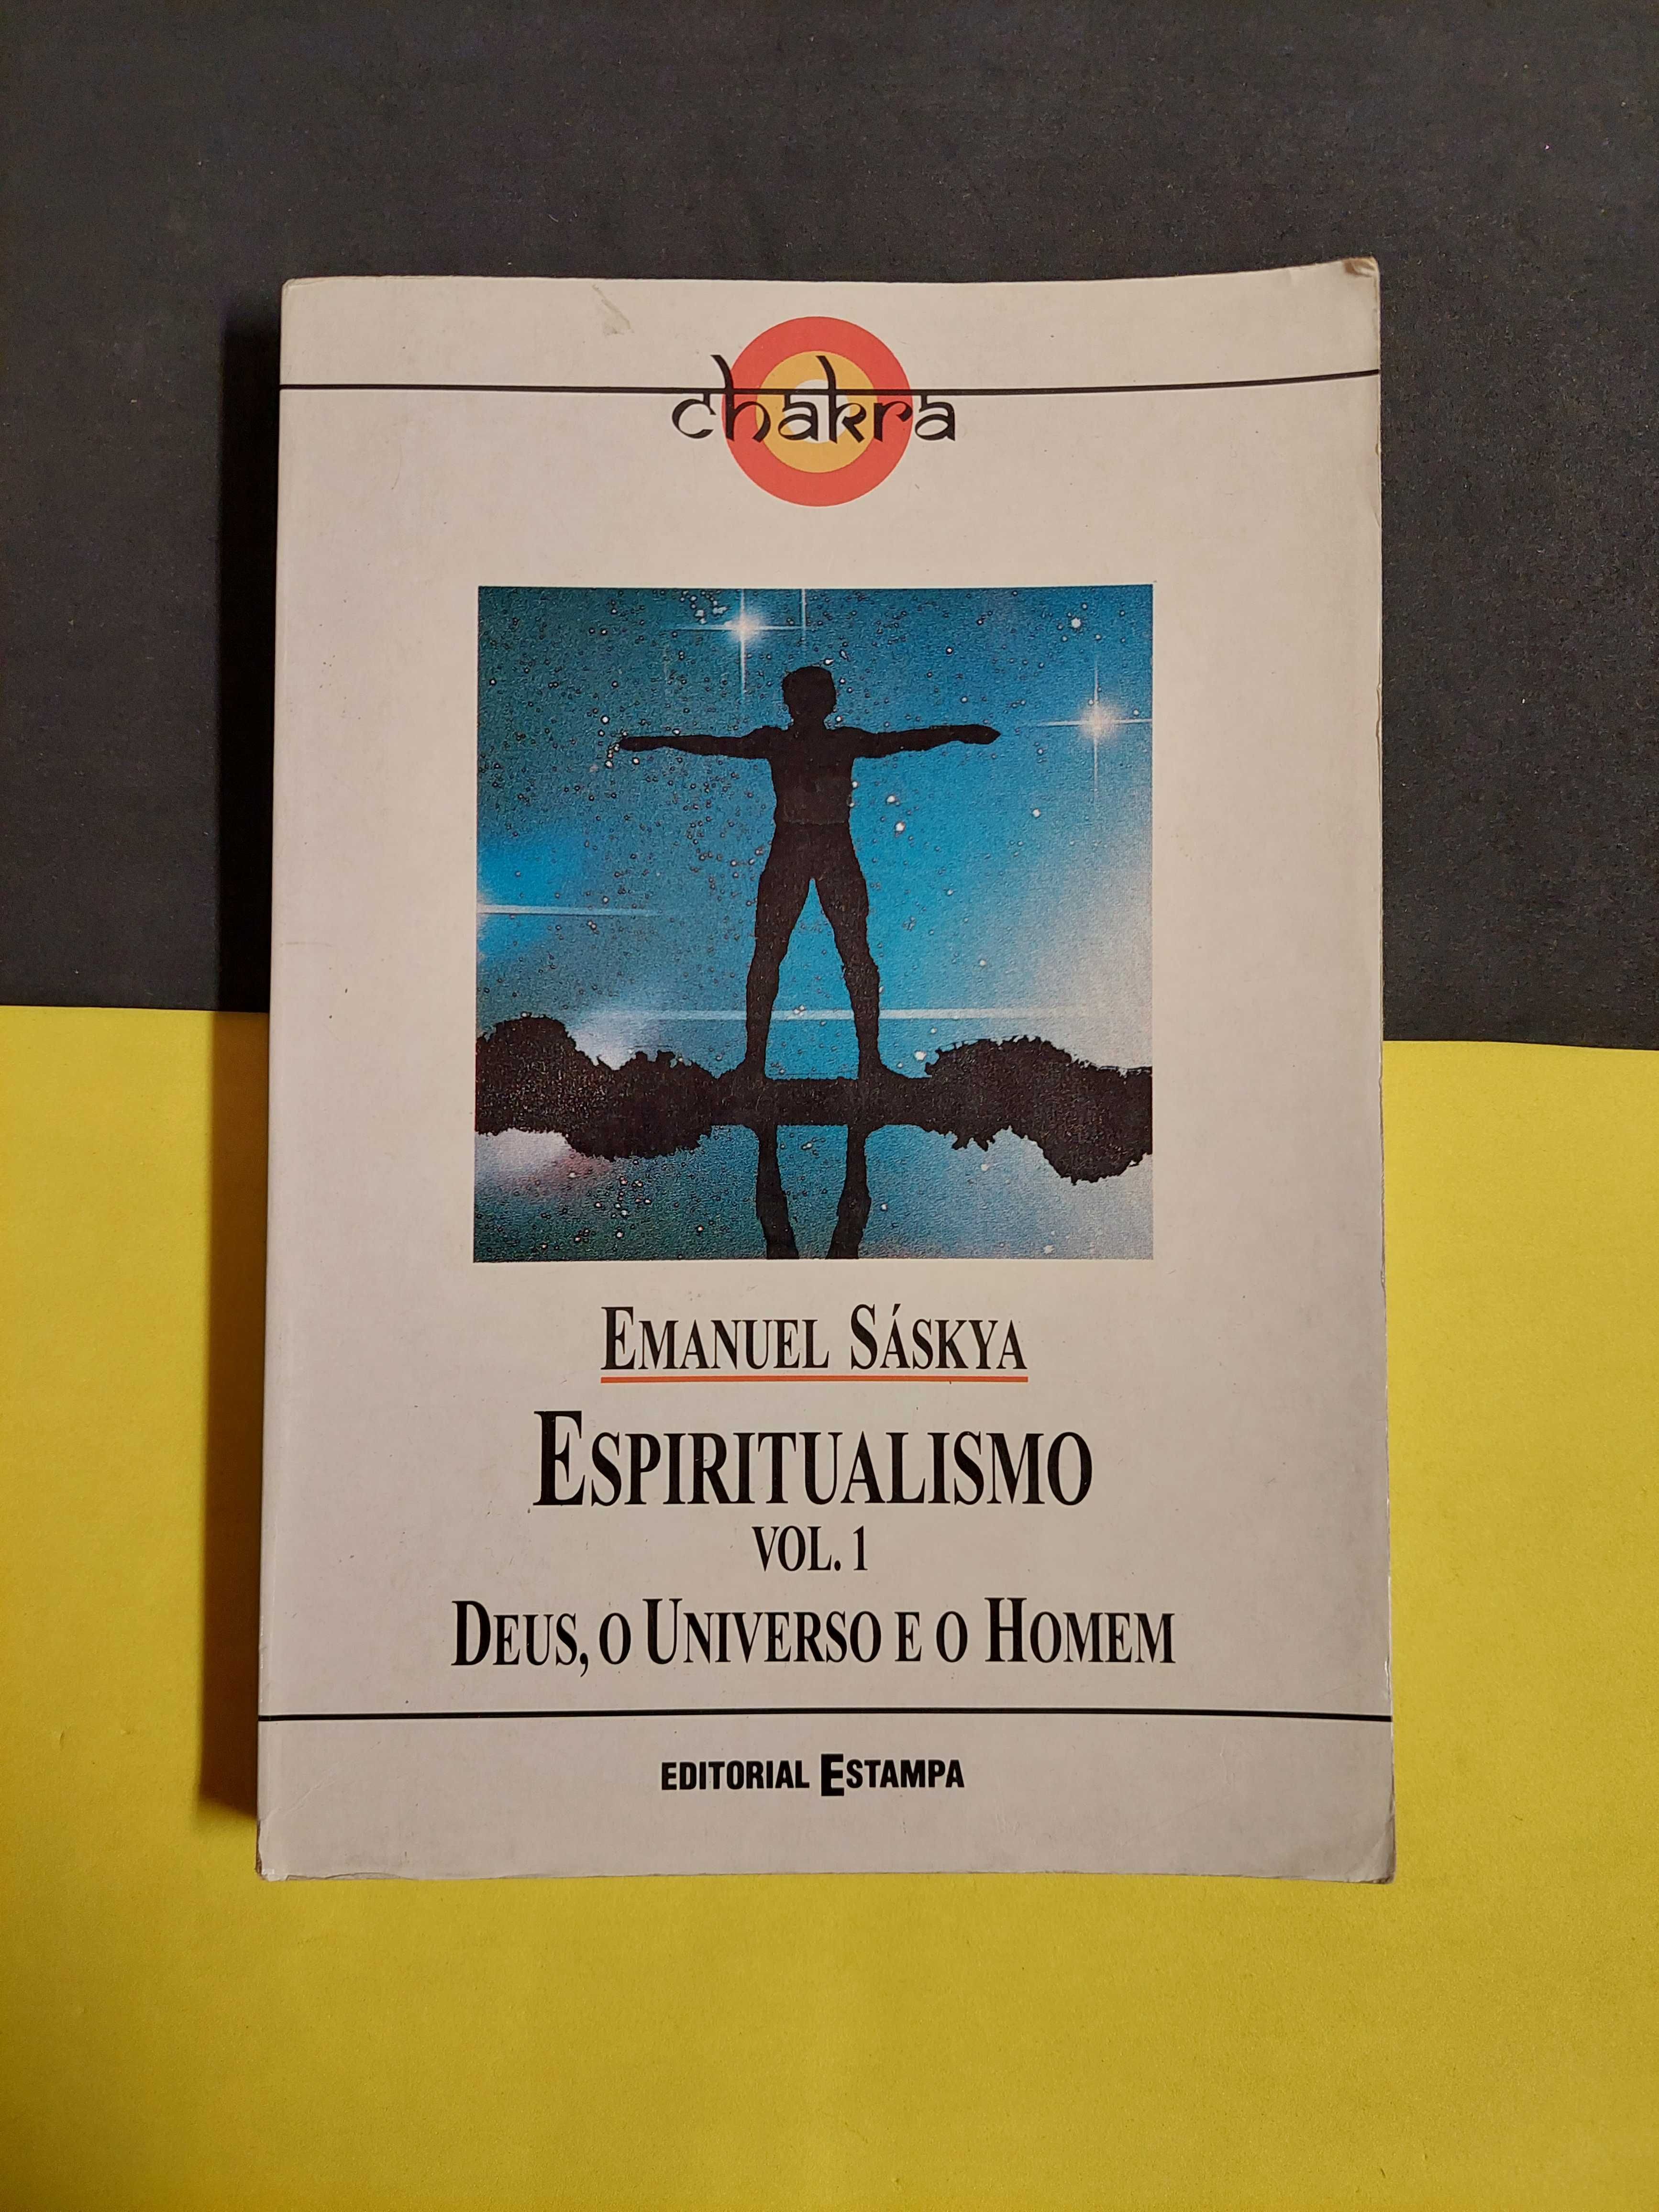 Emanuel Sáskya - Espiritualismo, 2 volumes